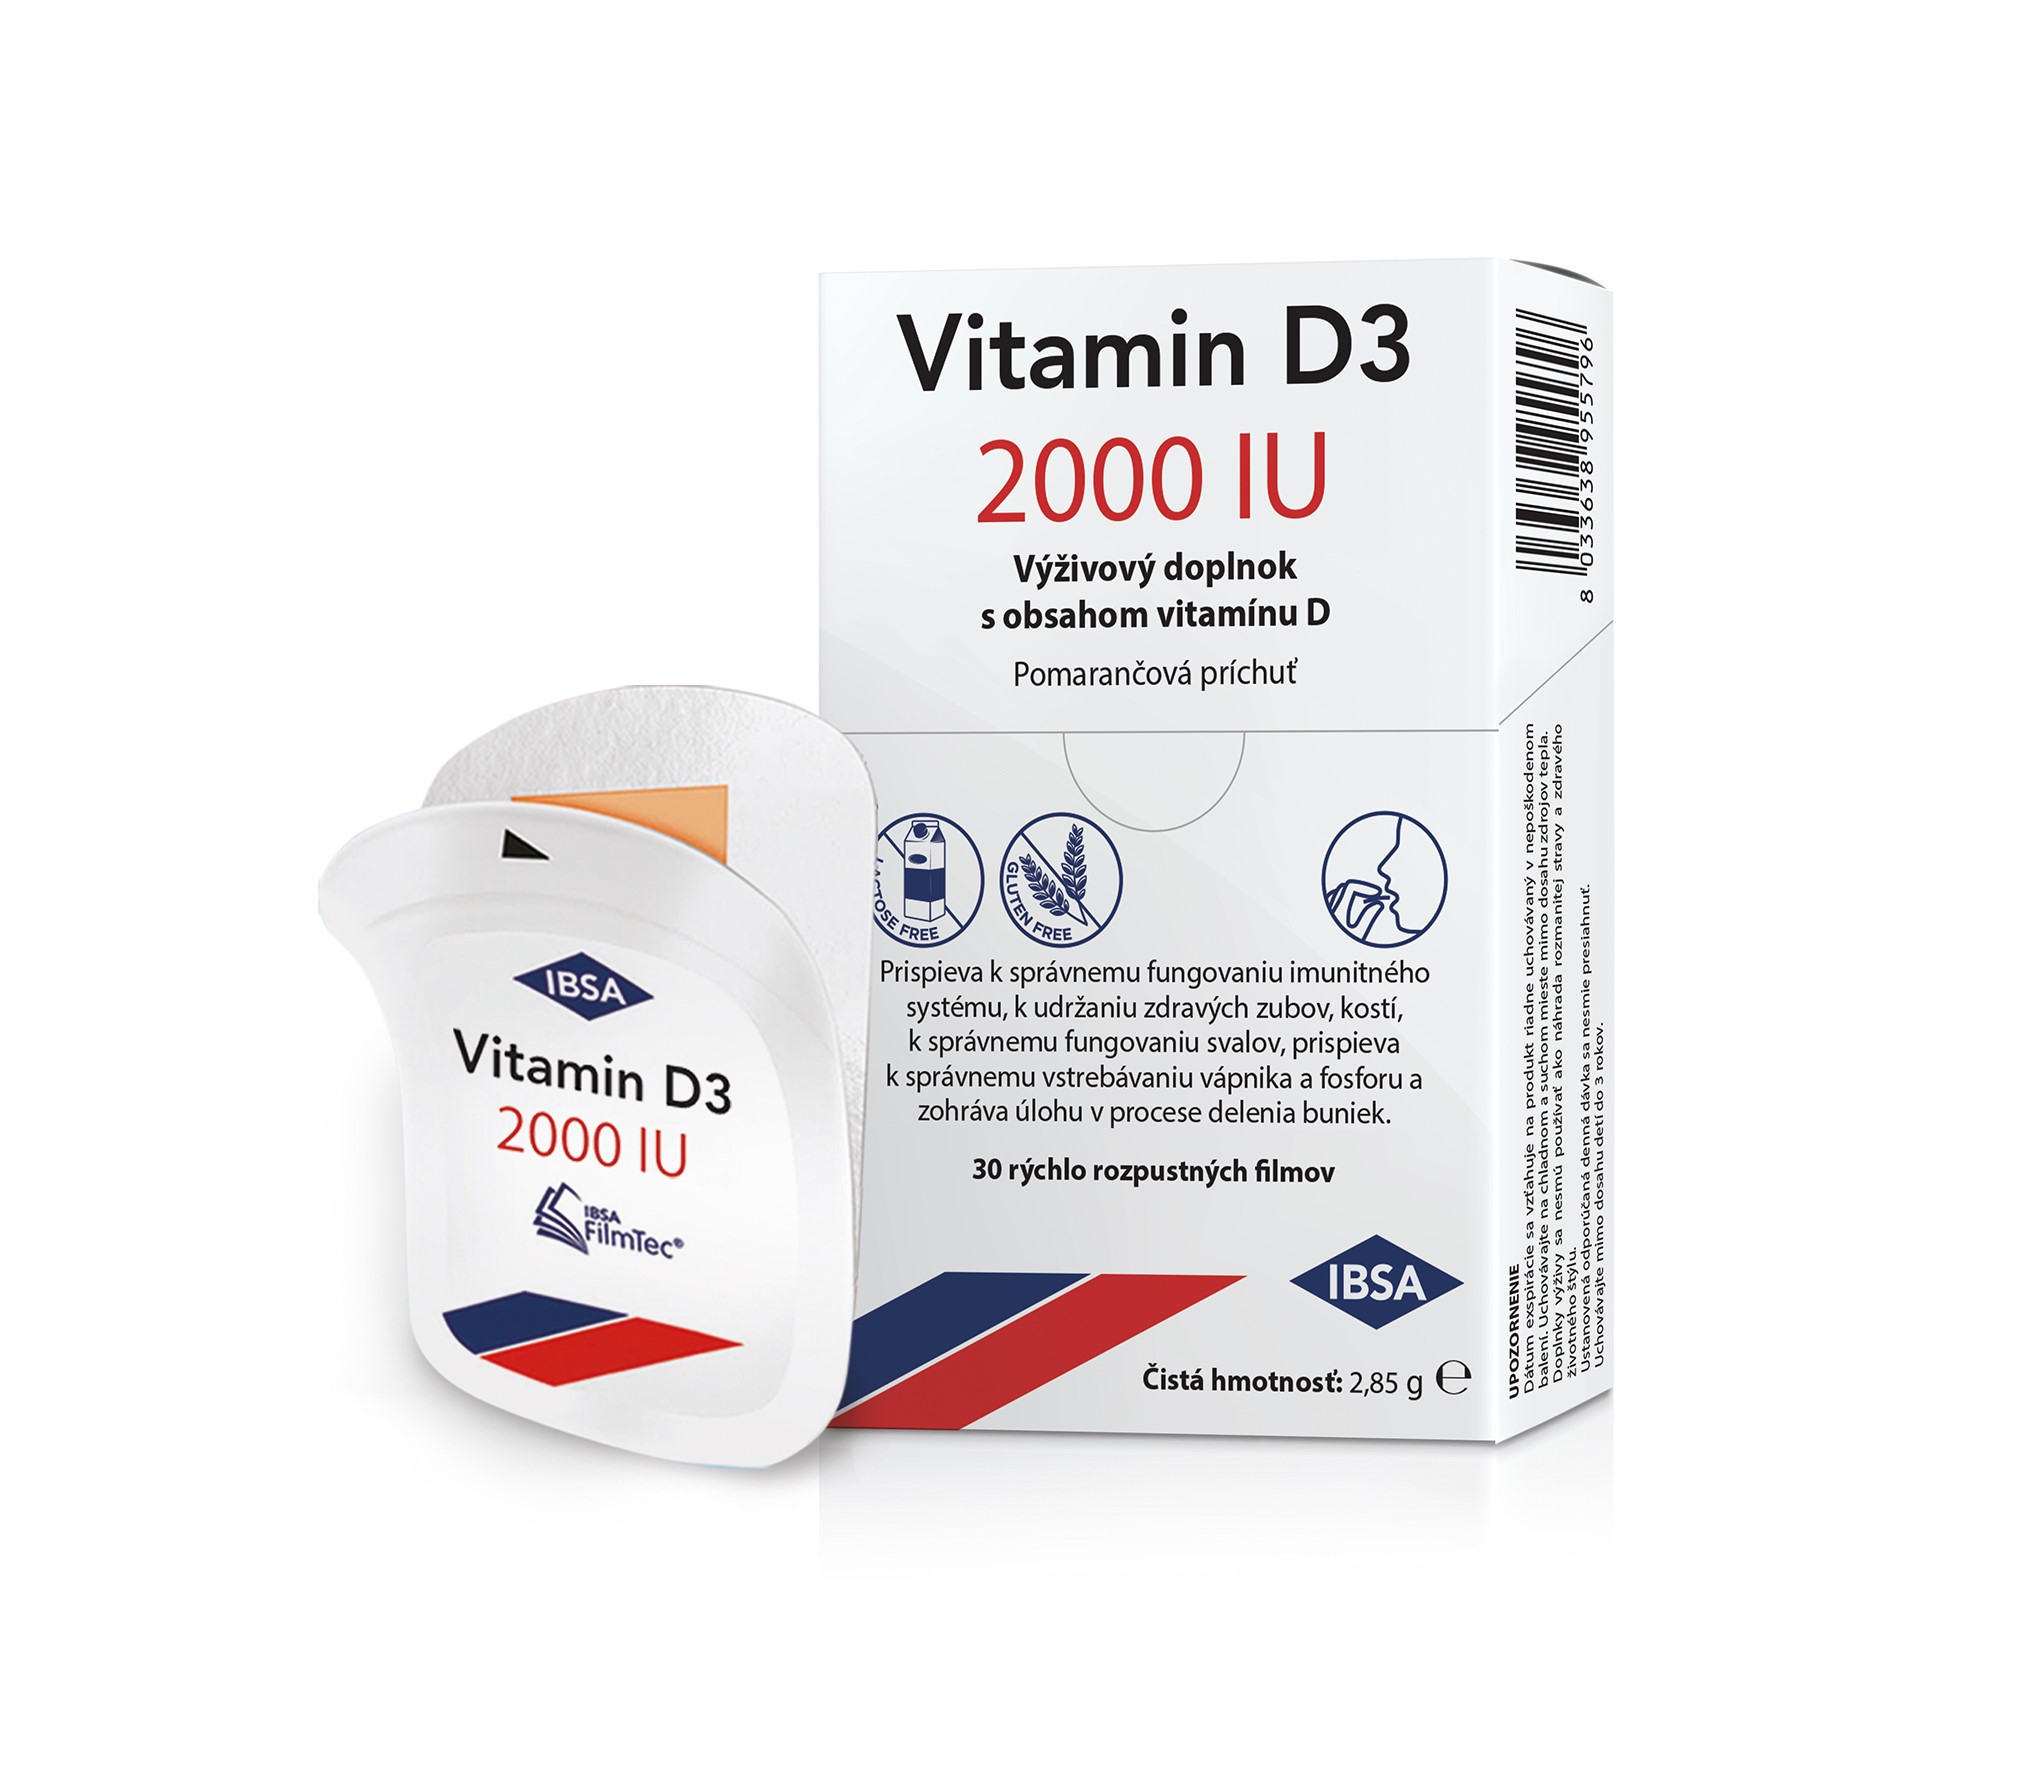 vitamin D3 a blister